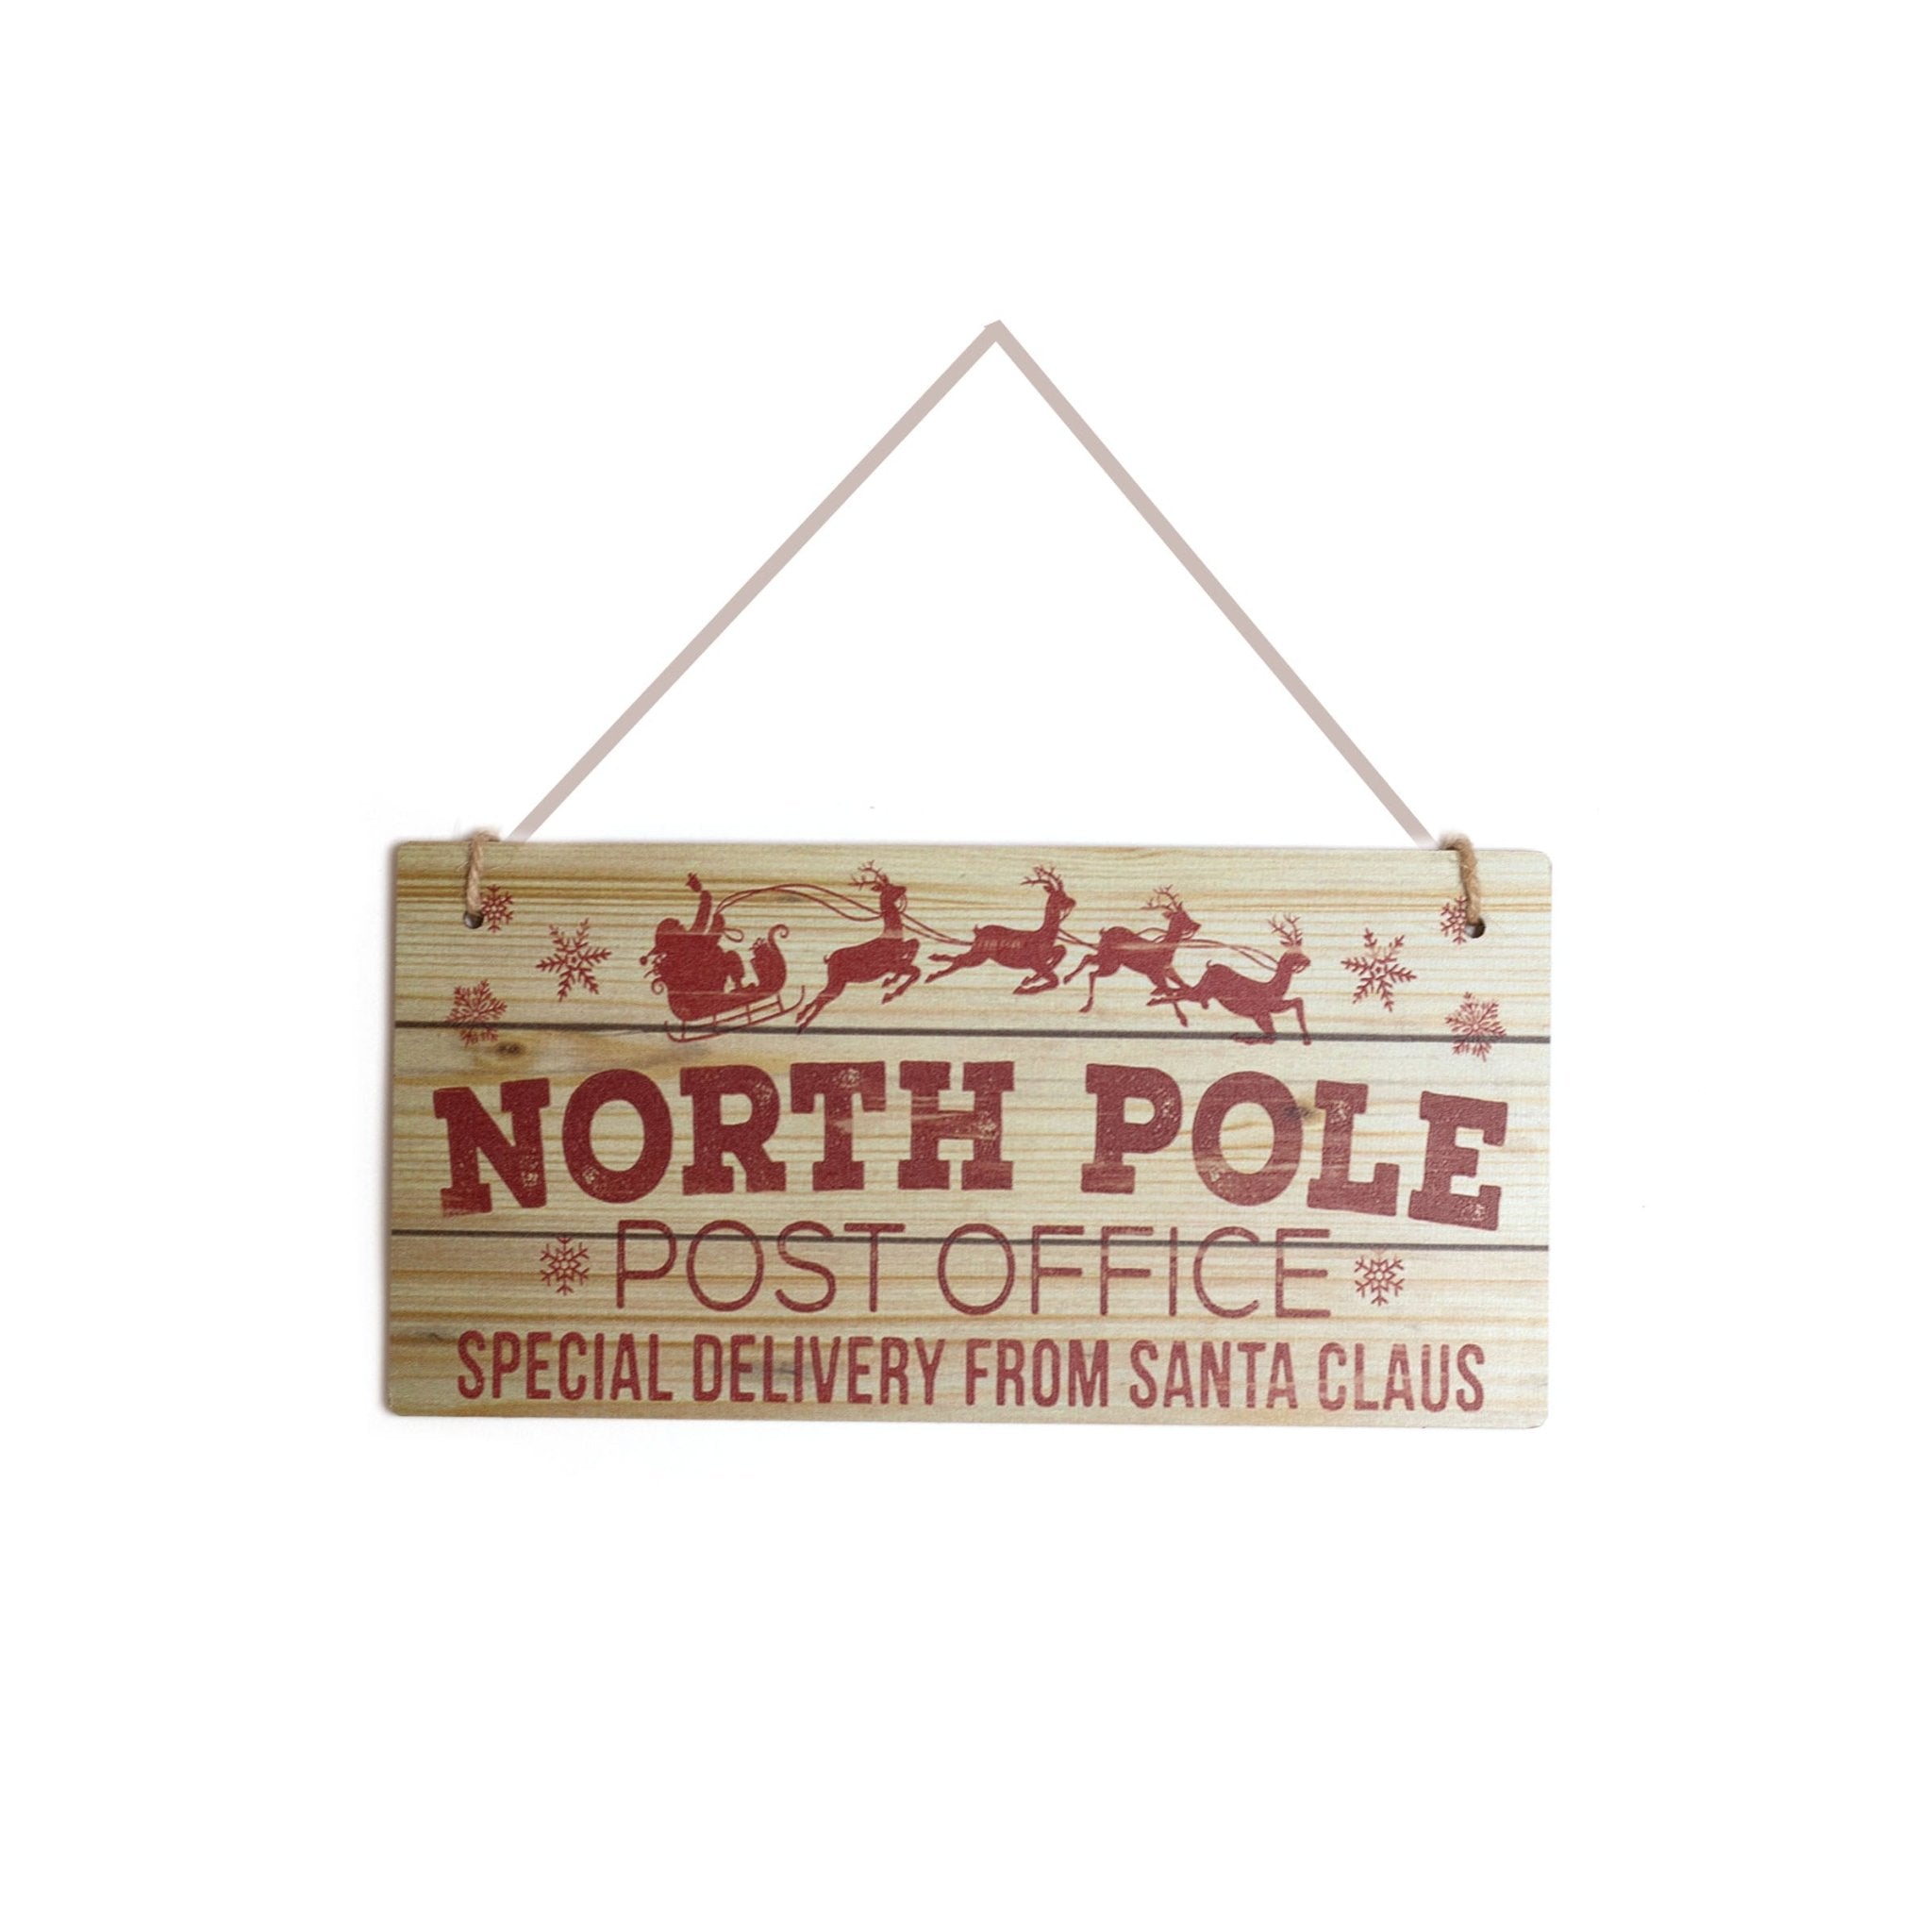 North Pole Post Office Wooden Sign 10x20cm 1020001 - MODA FLORA Santa's Workshop